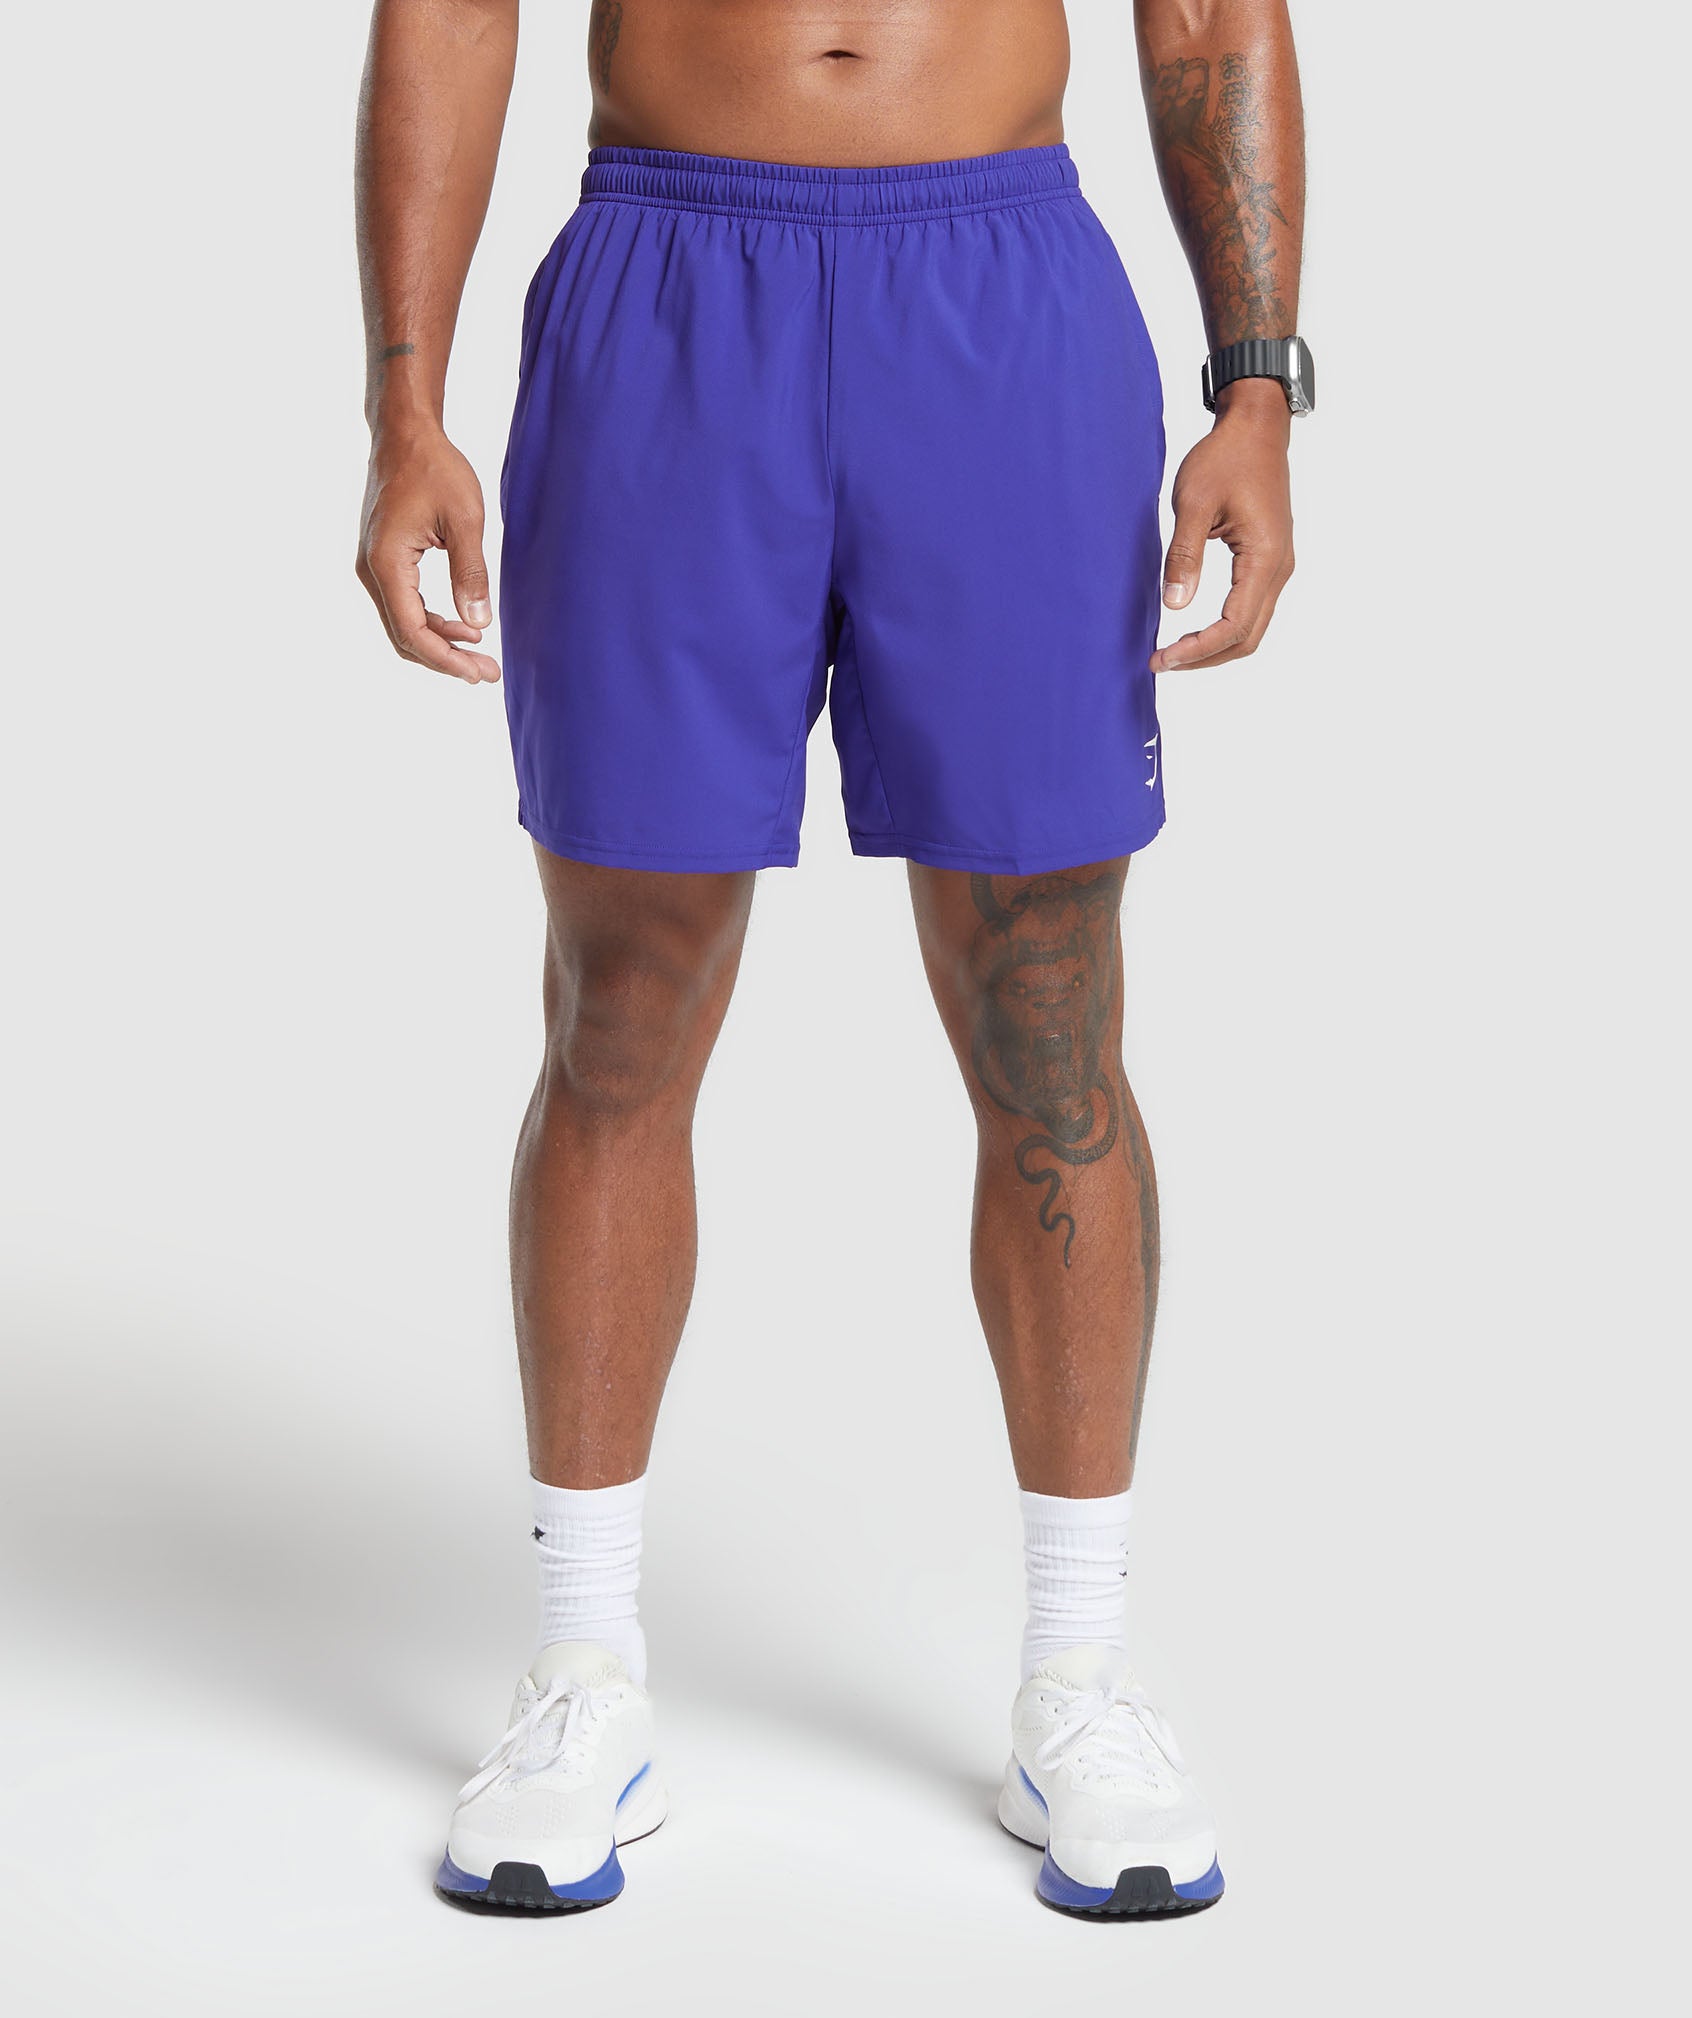 Gymshark Arrival 7 Shorts - Cobalt Purple